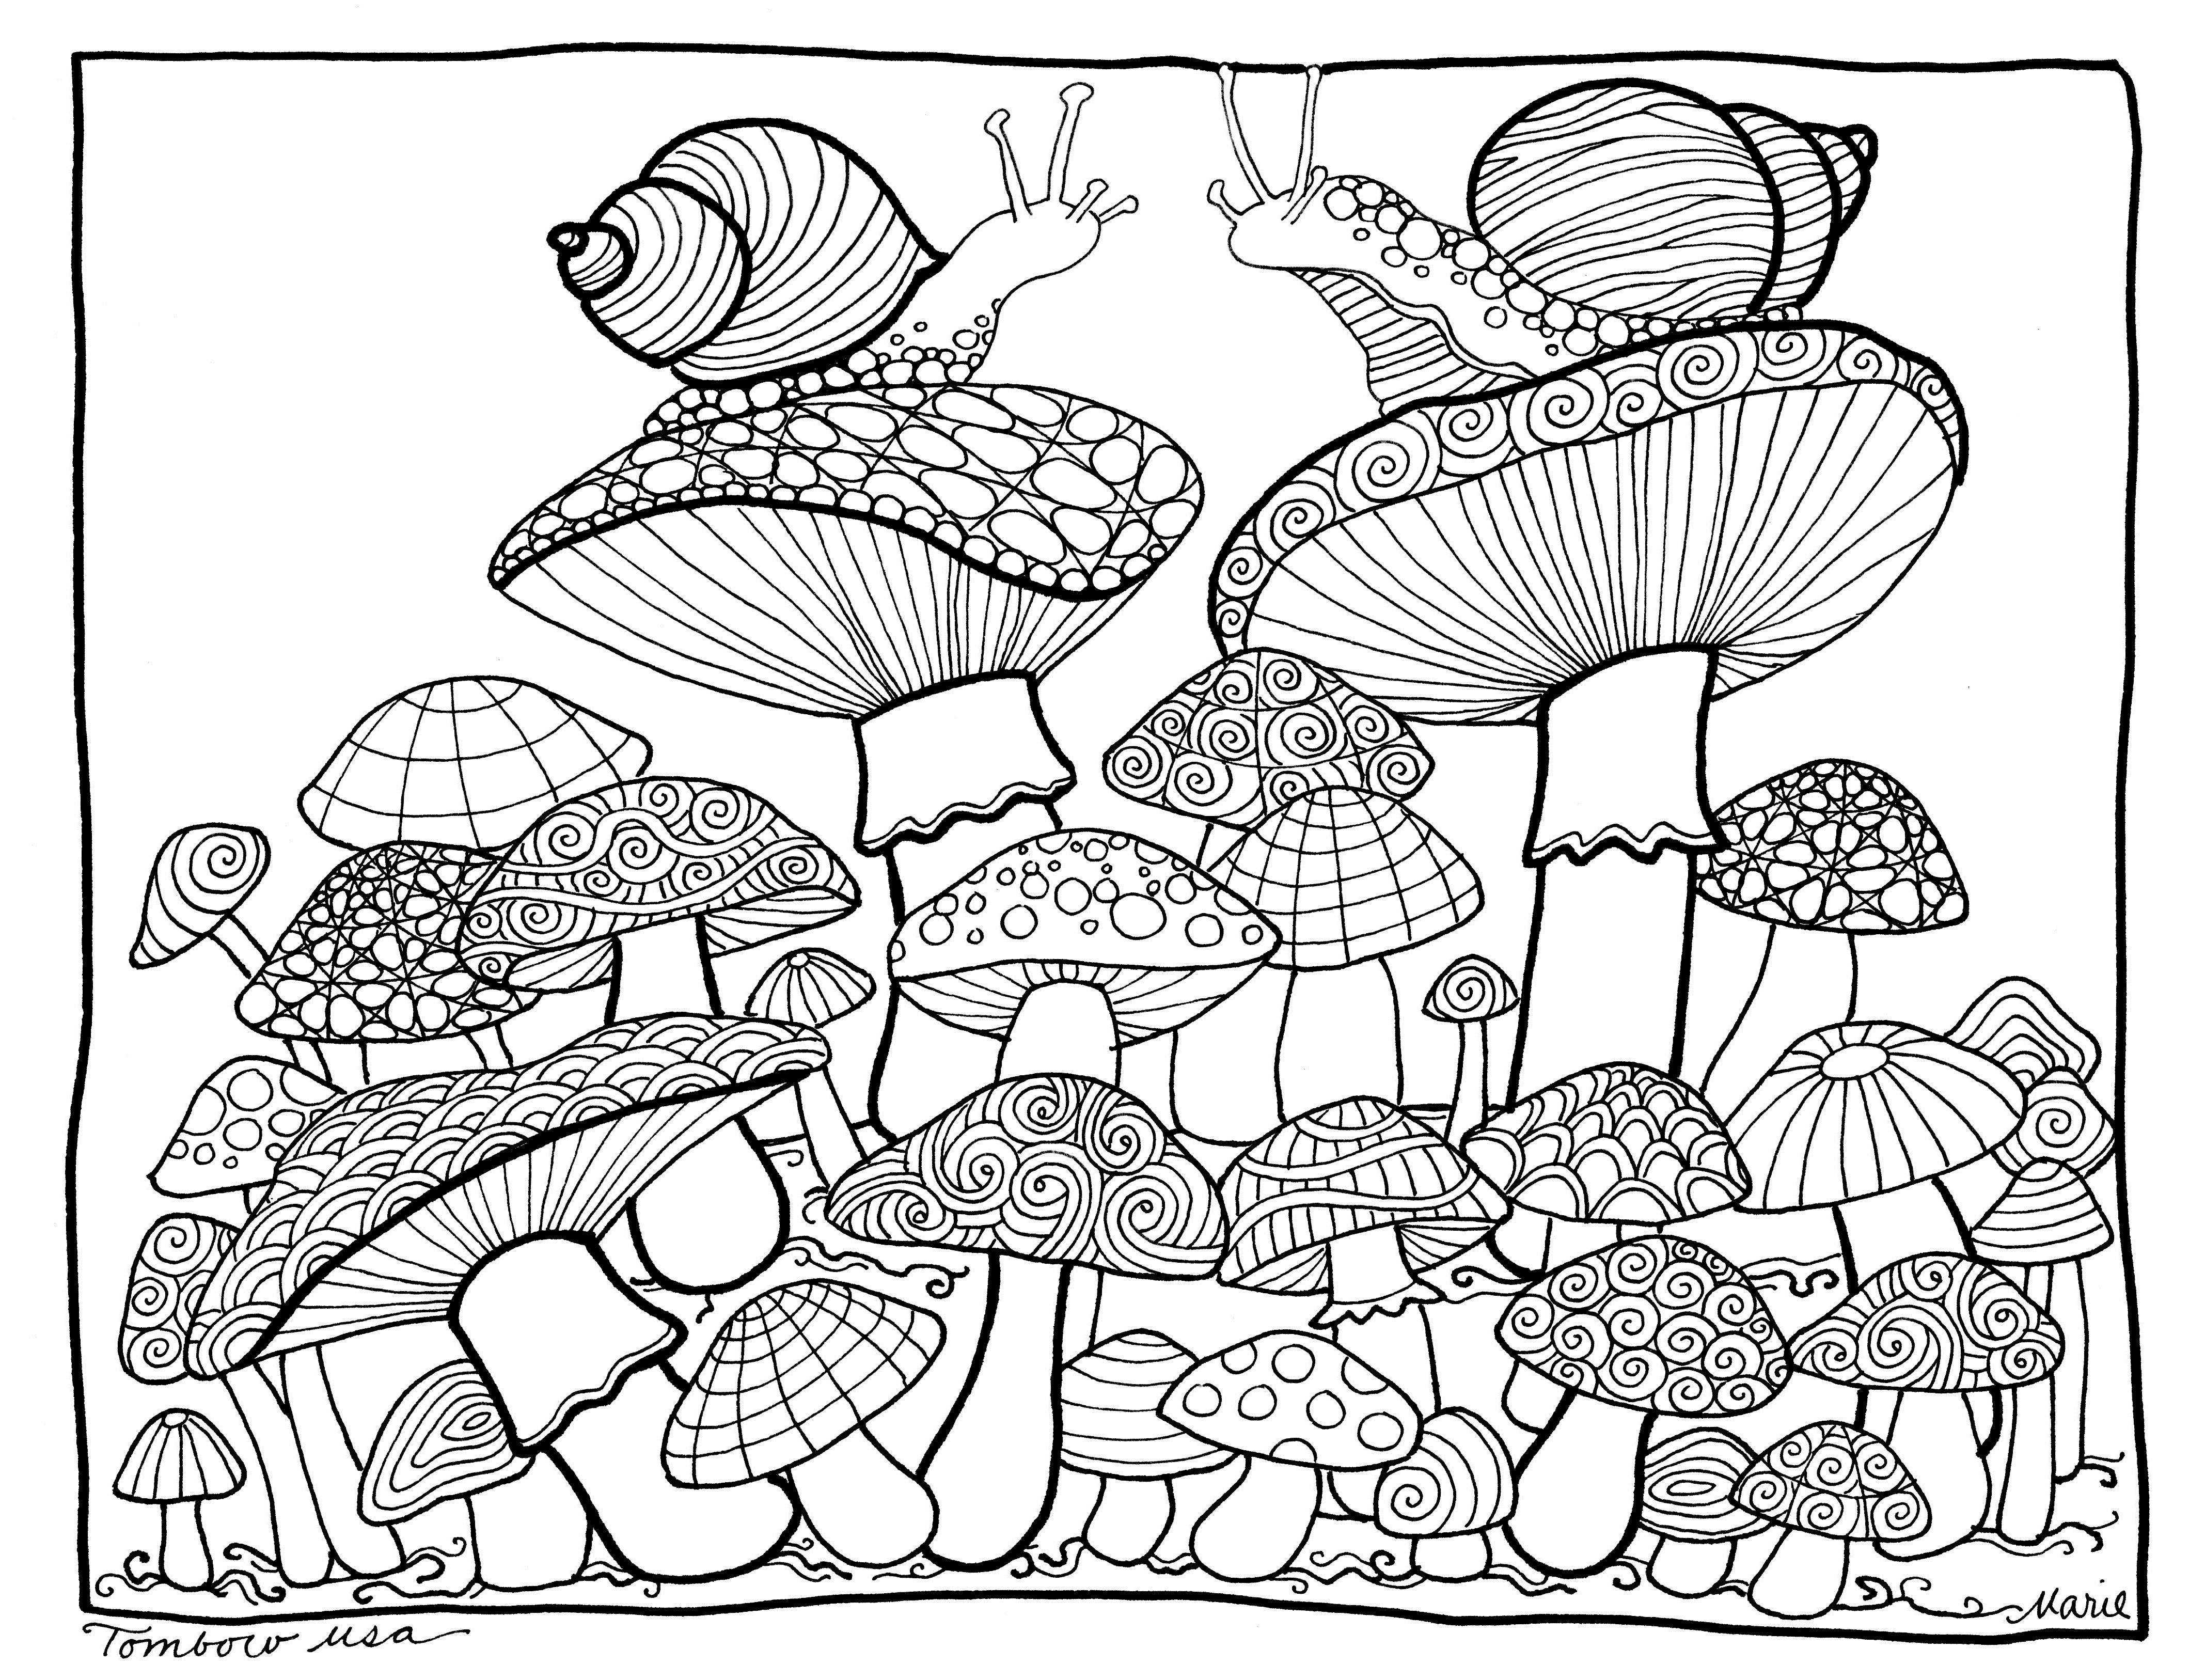 Free Printable Mushroom Coloring Pages at GetDrawings   Free download